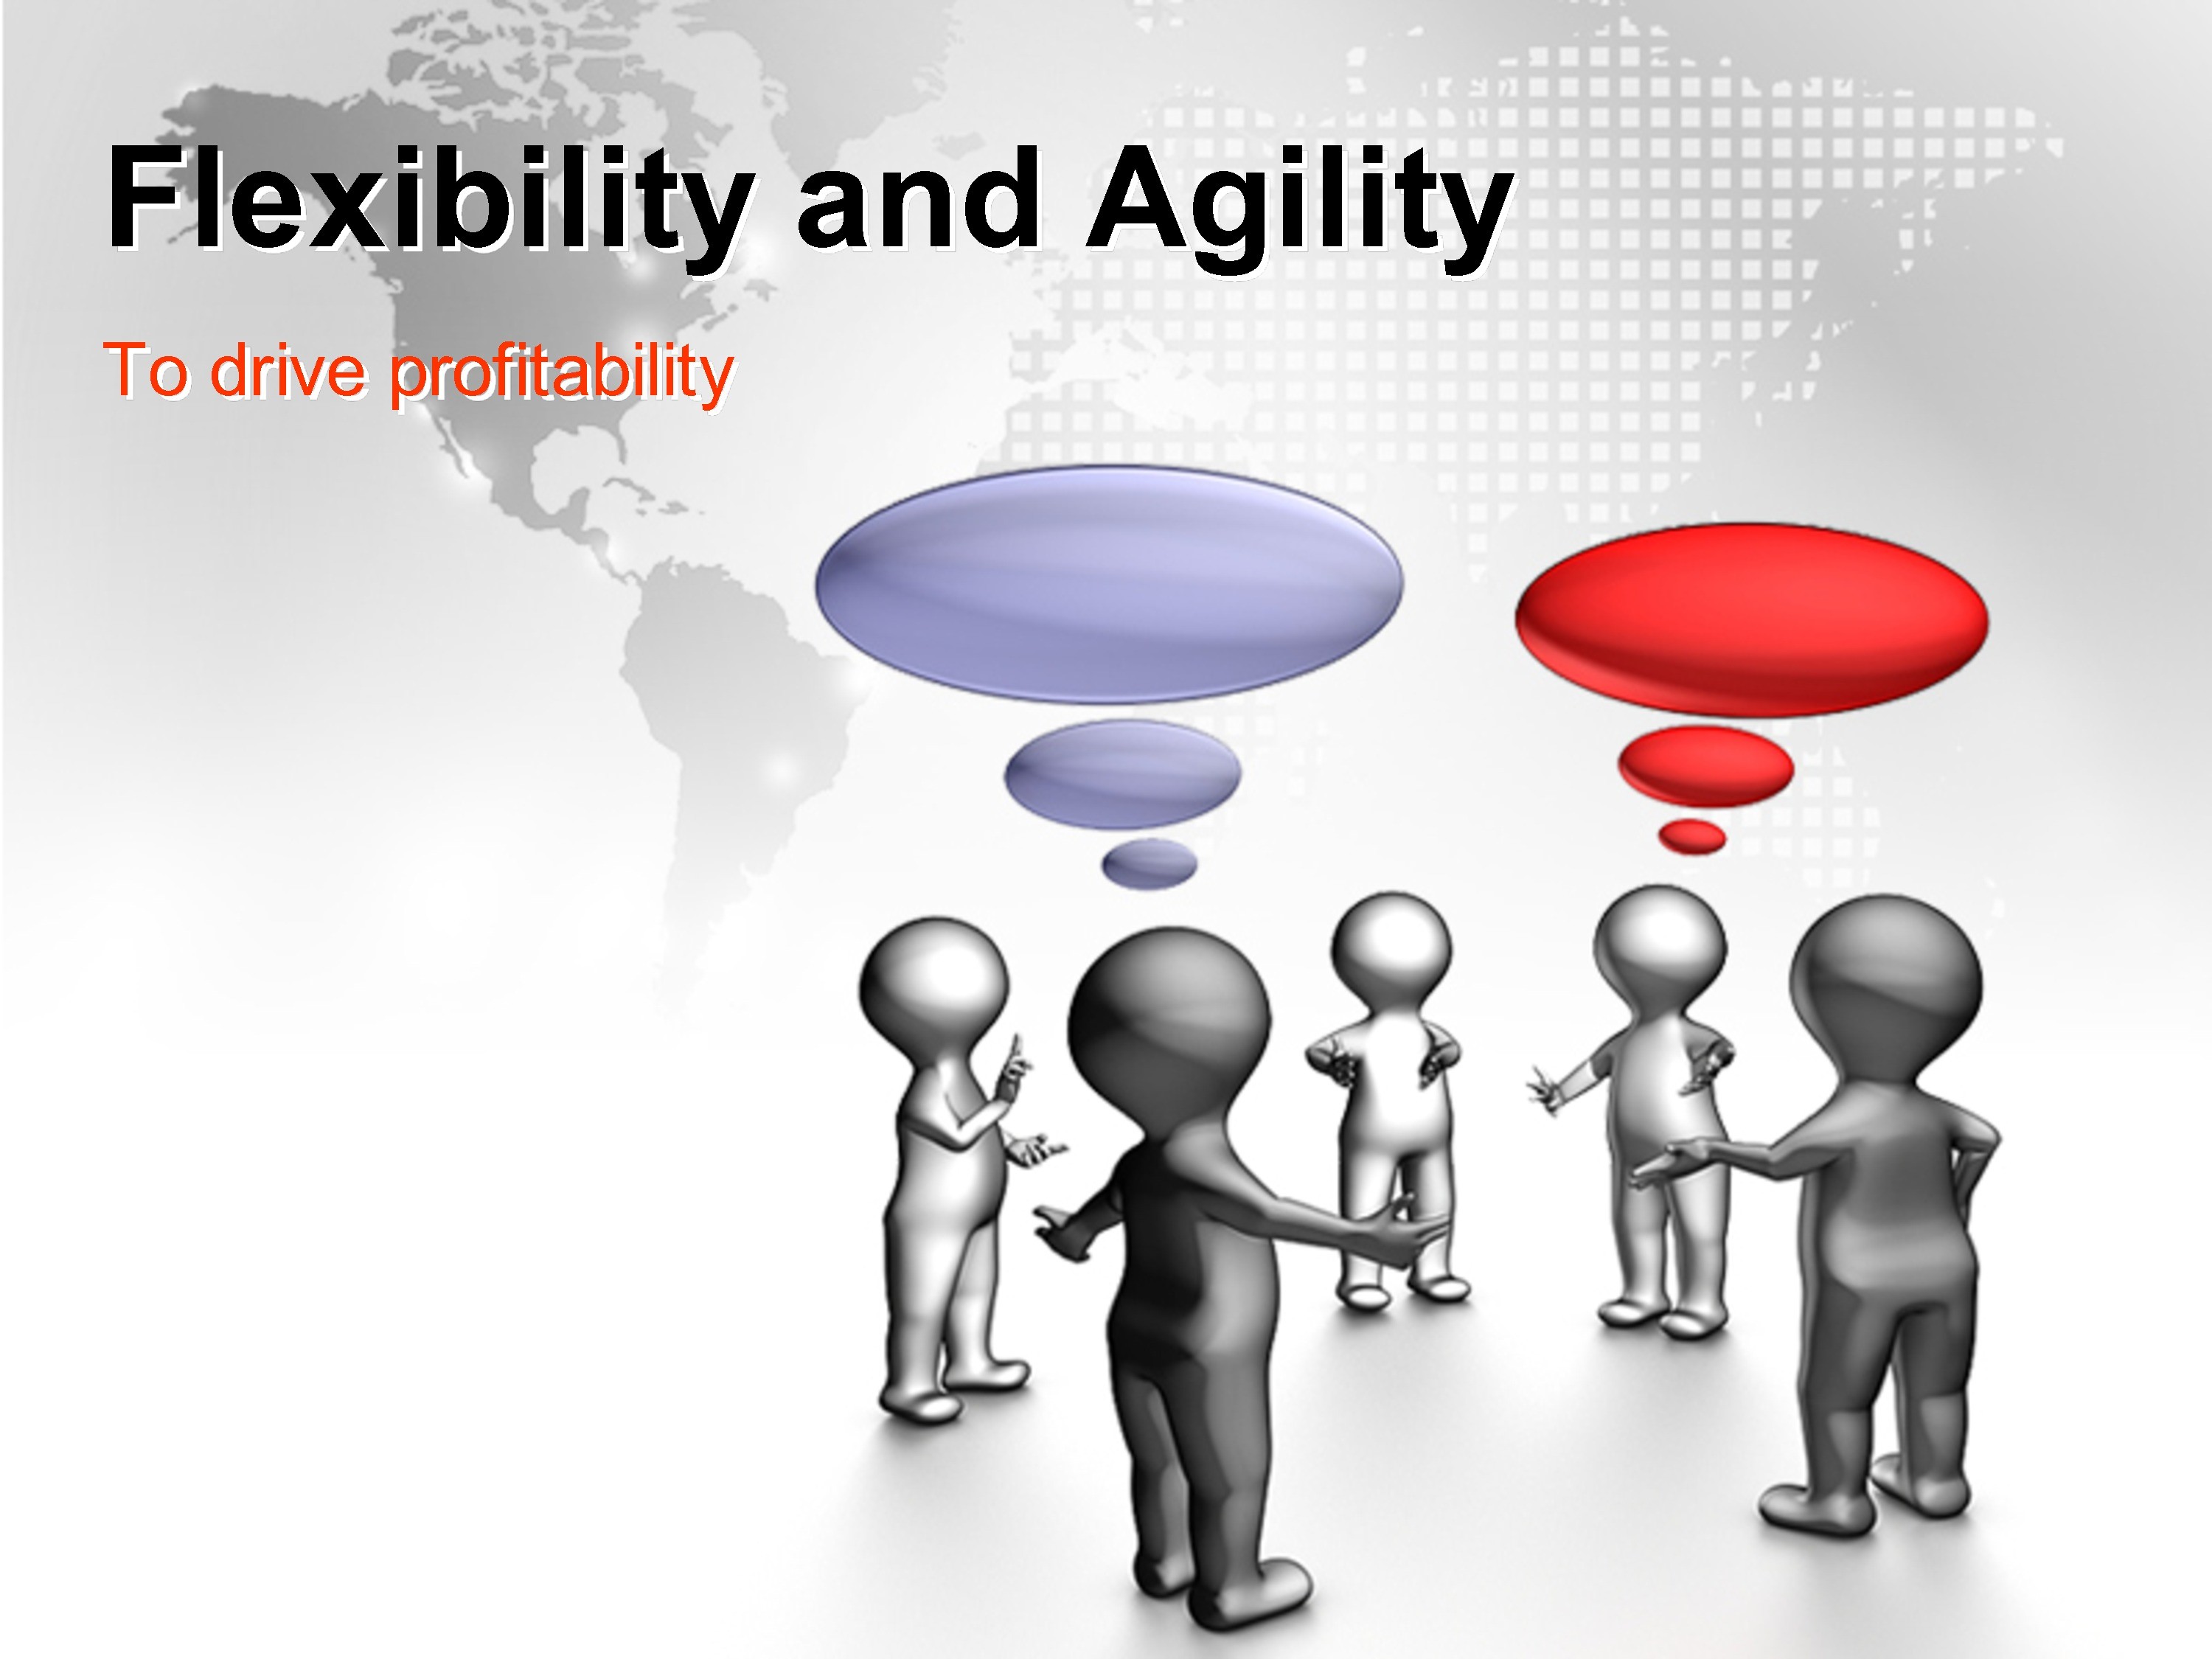 Flexibility and Agility to Drive Profitability